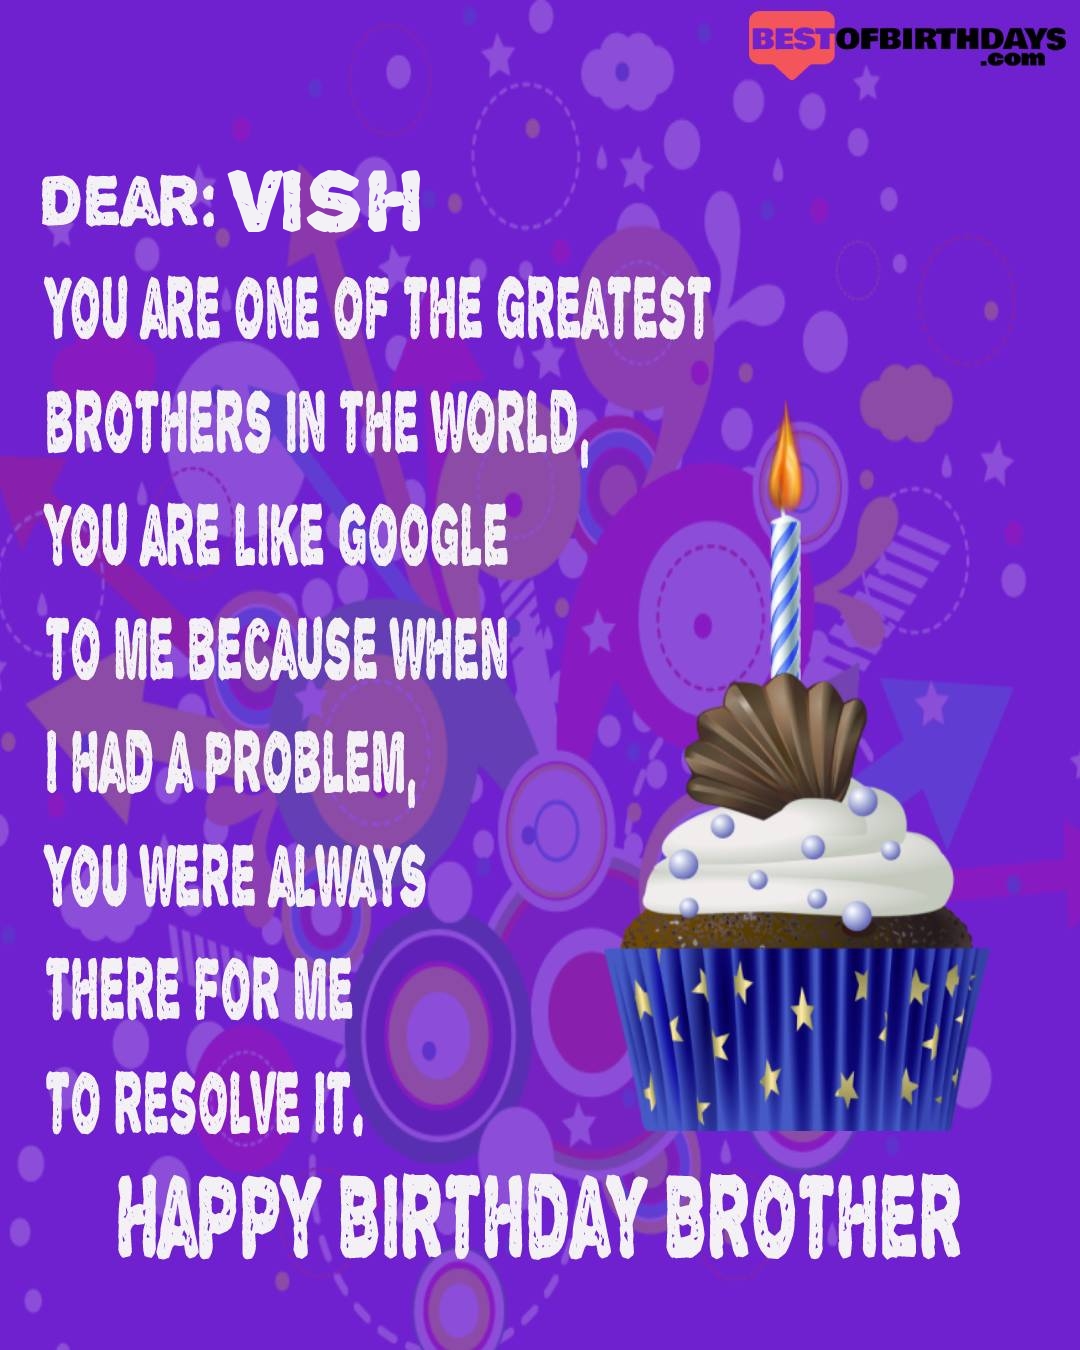 Happy birthday vish bhai brother bro